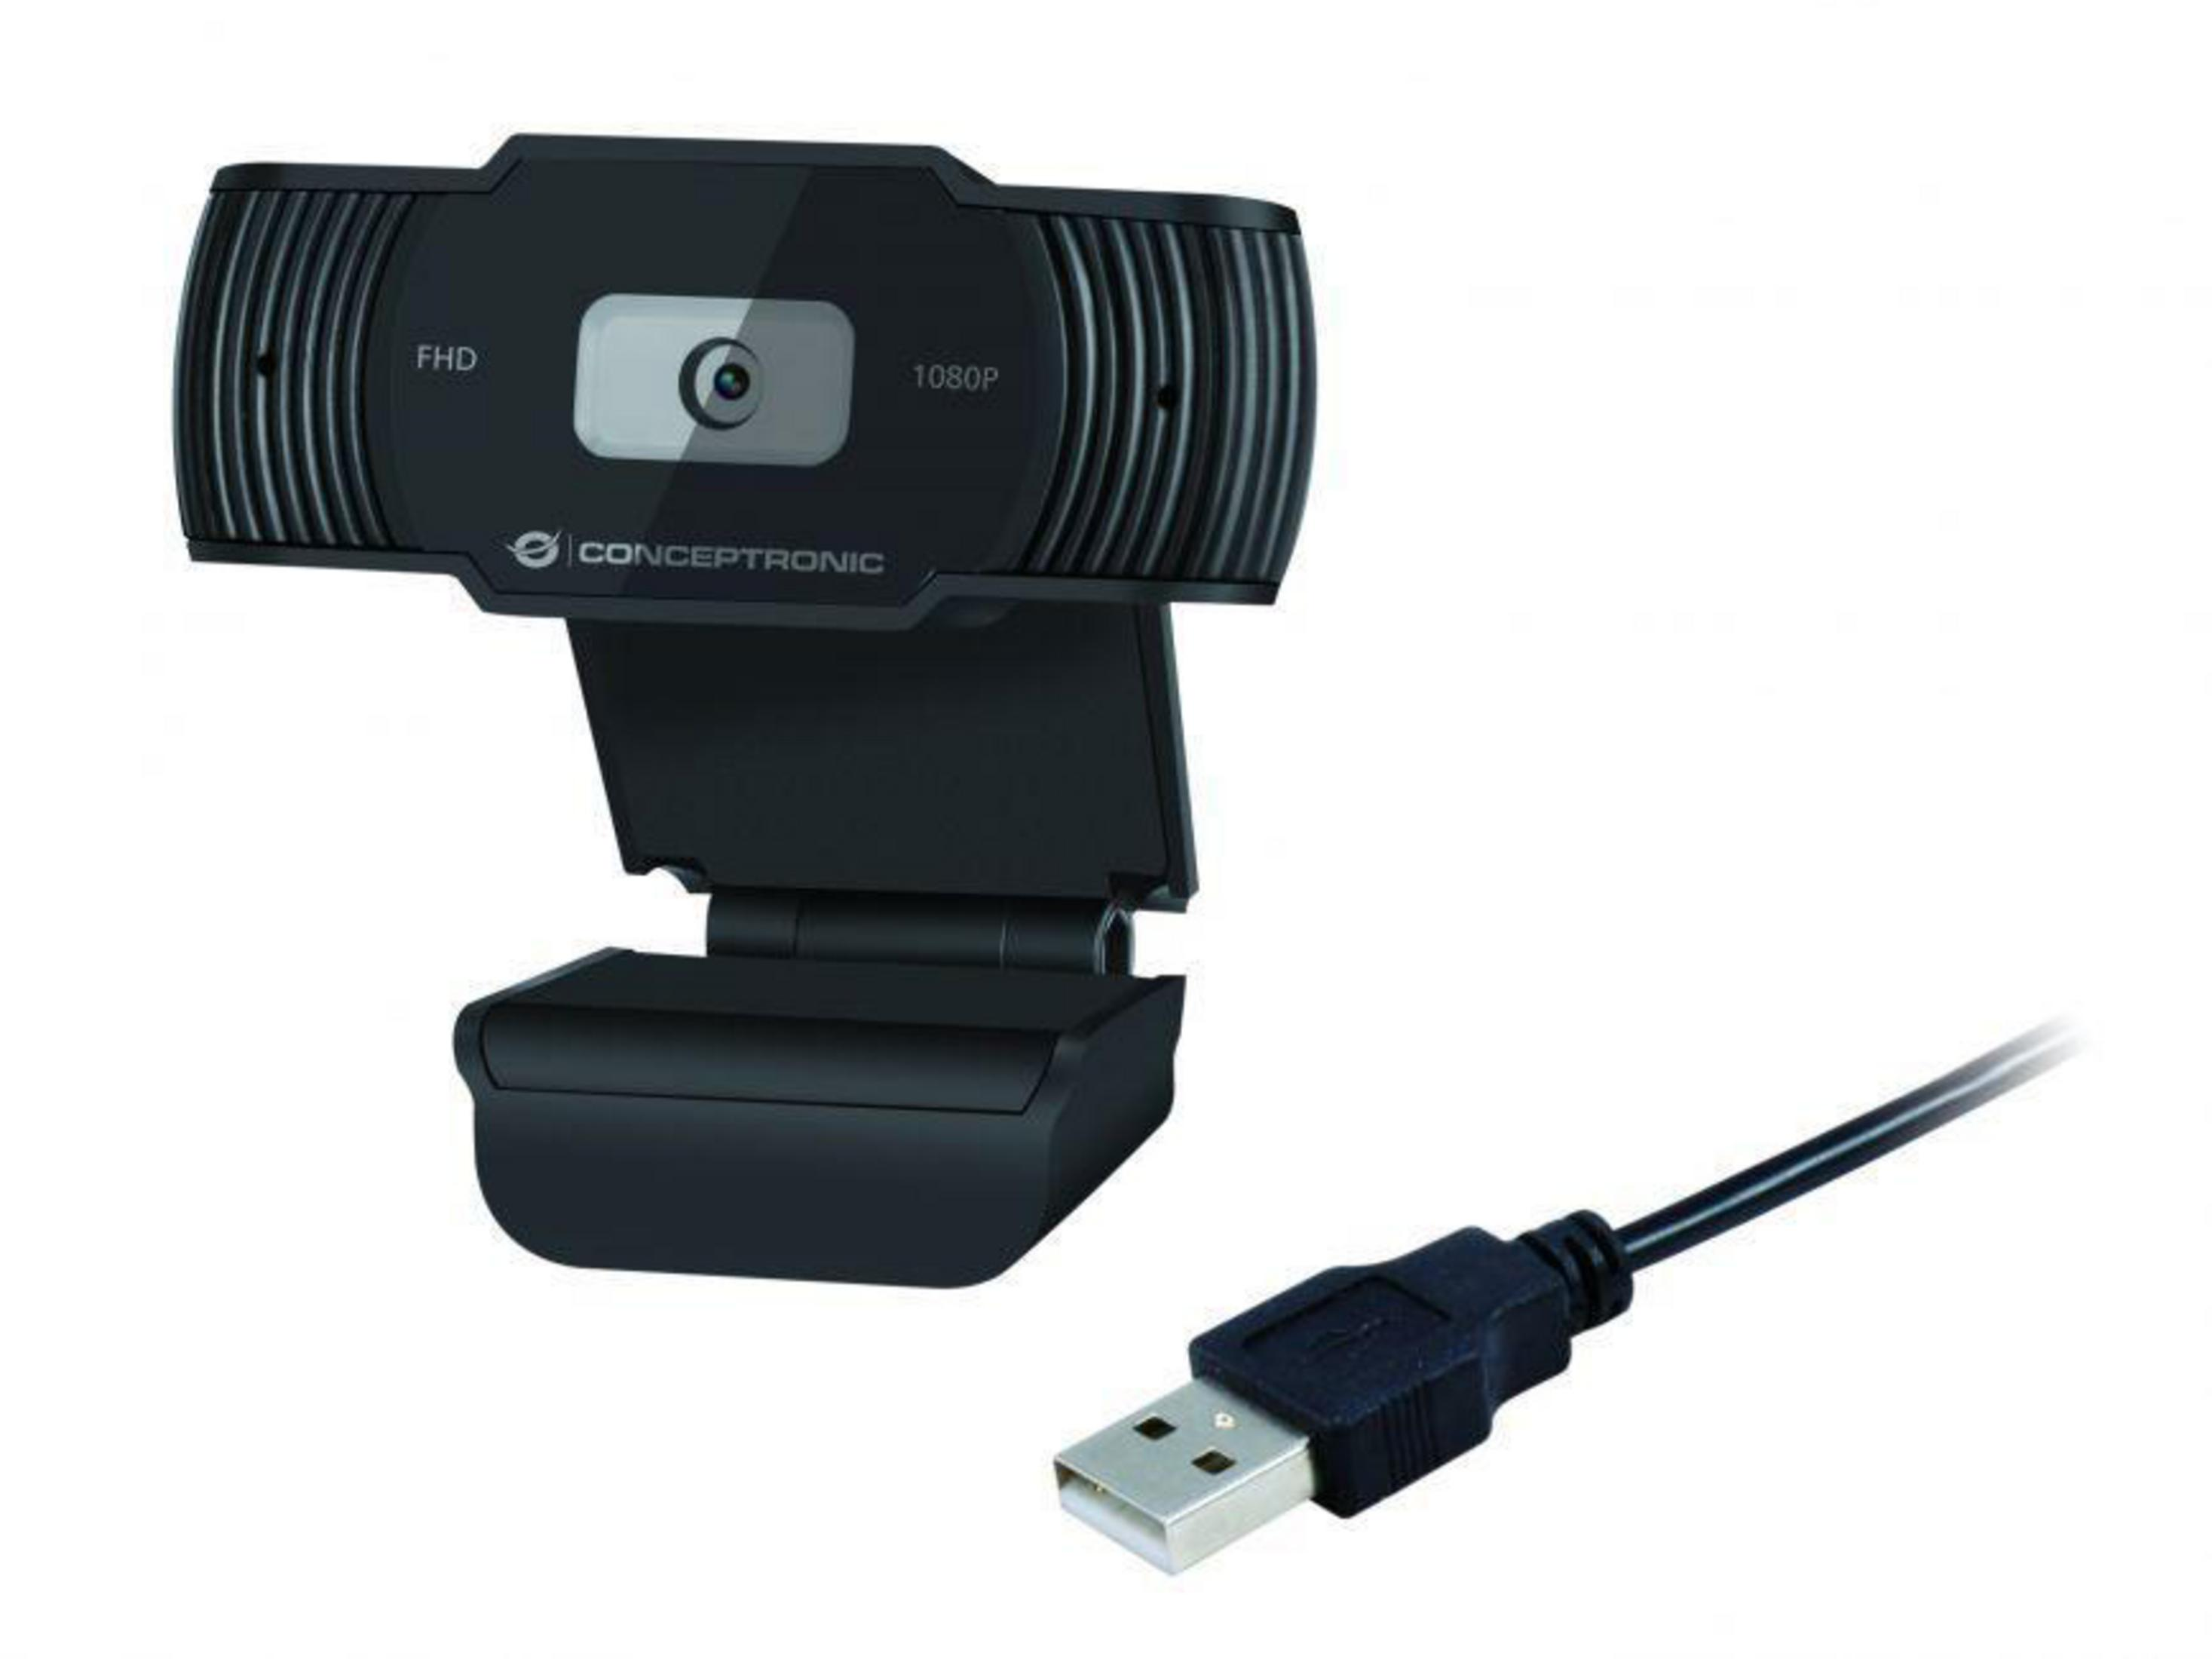 Webcam HD FULL CONCEPTRONIC 1080P AMDIS04B